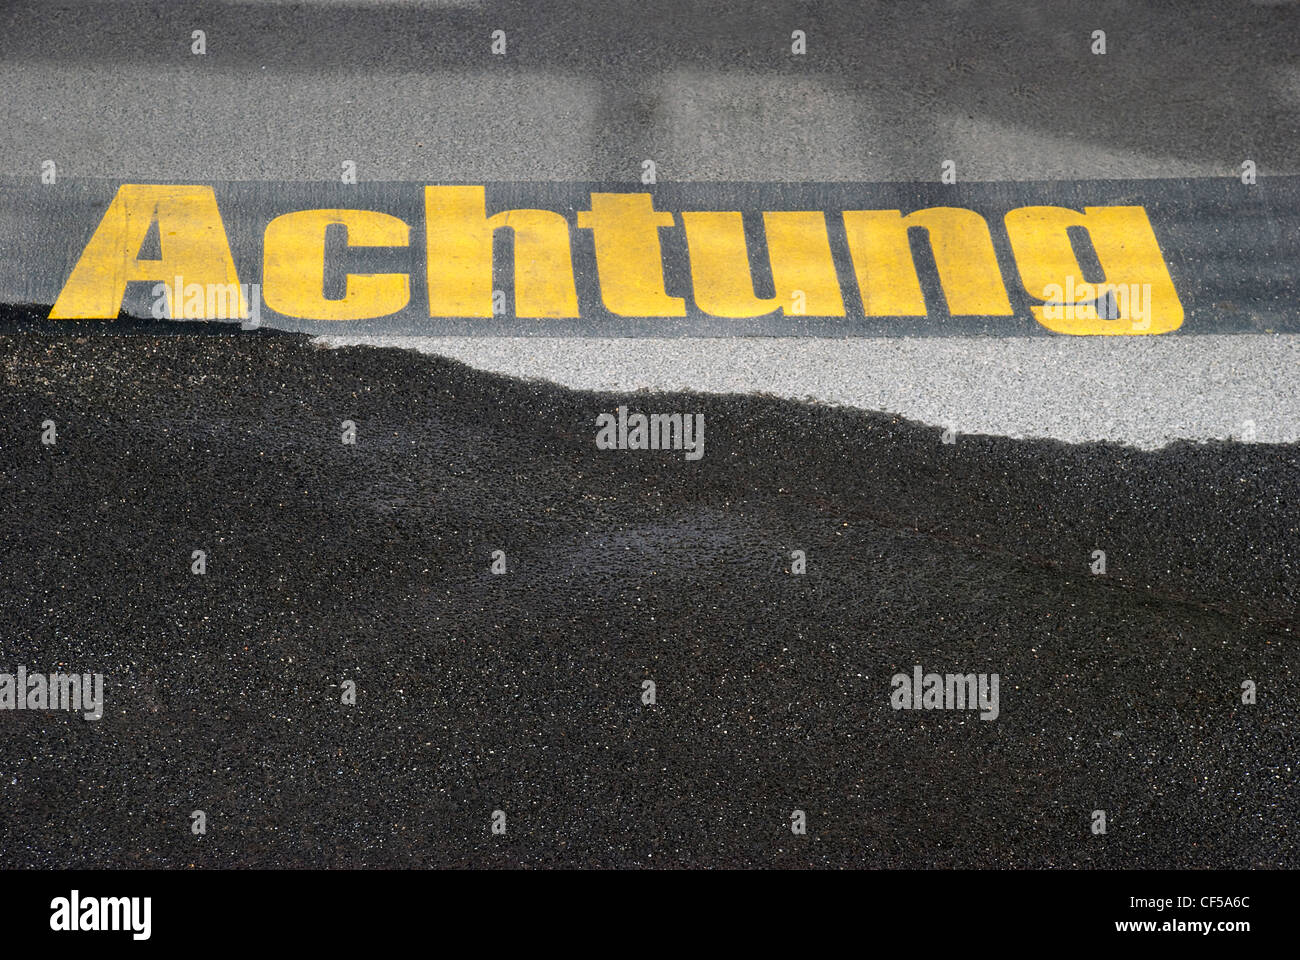 Germany, Text written on asphalt, close up Stock Photo